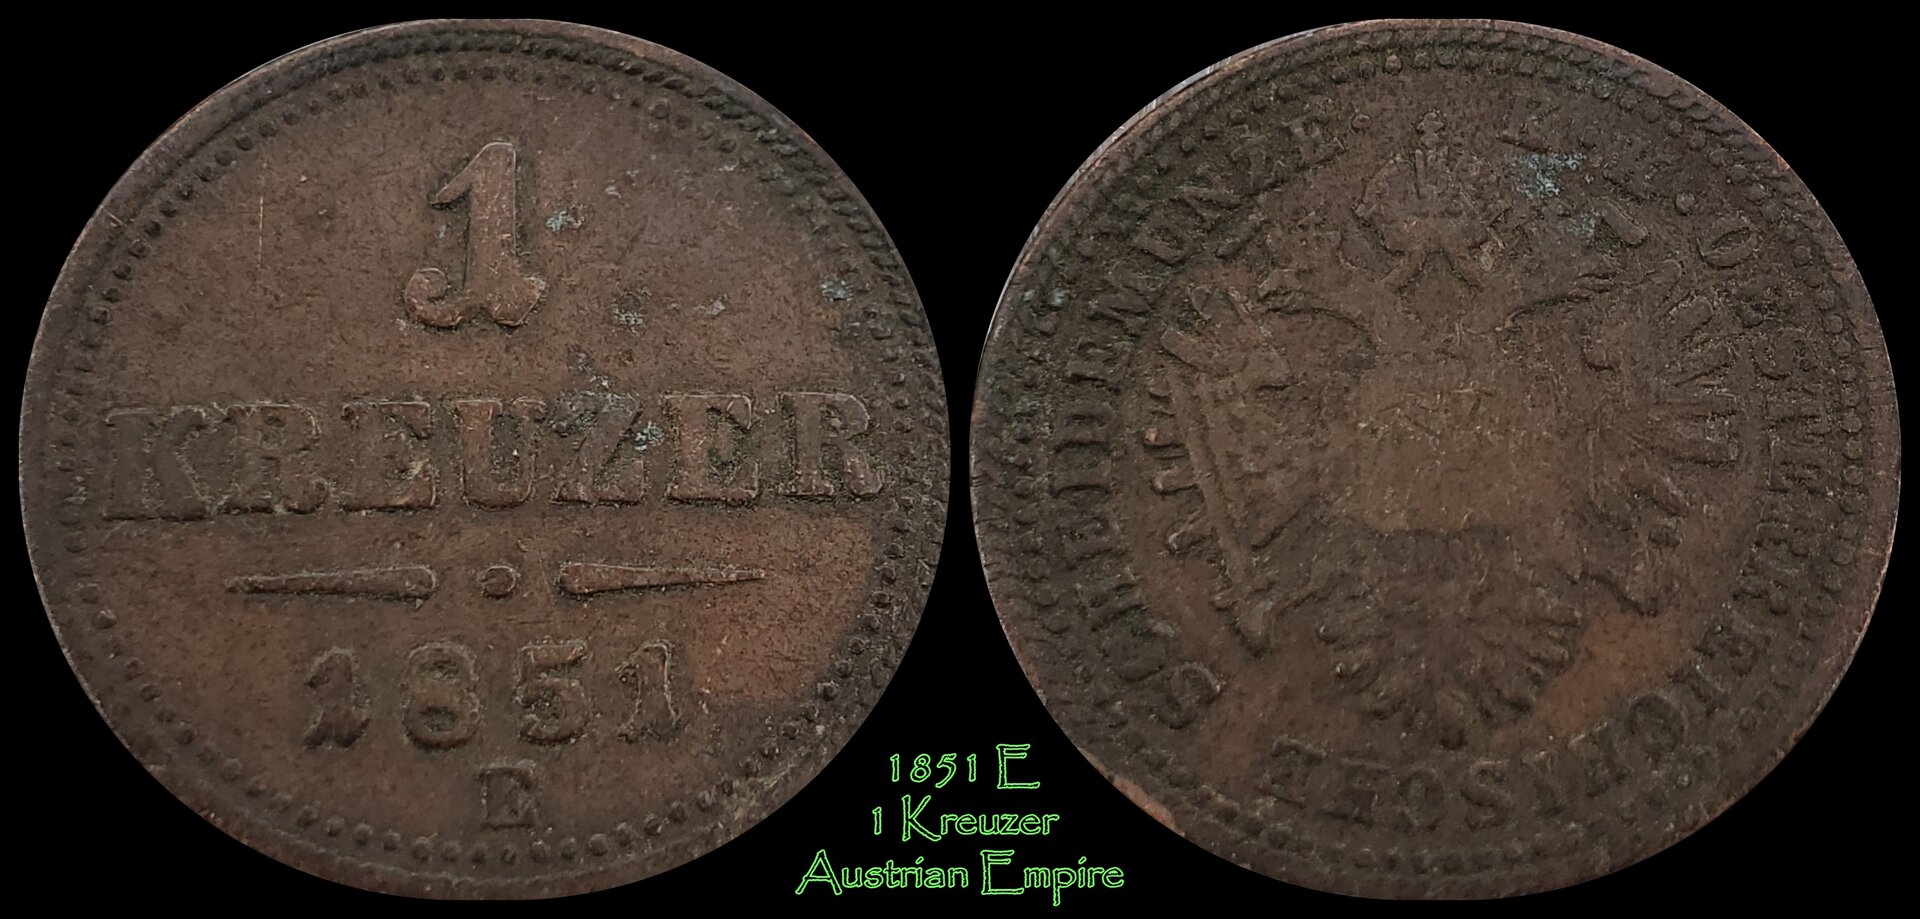 1851 E 1K Austria.jpg